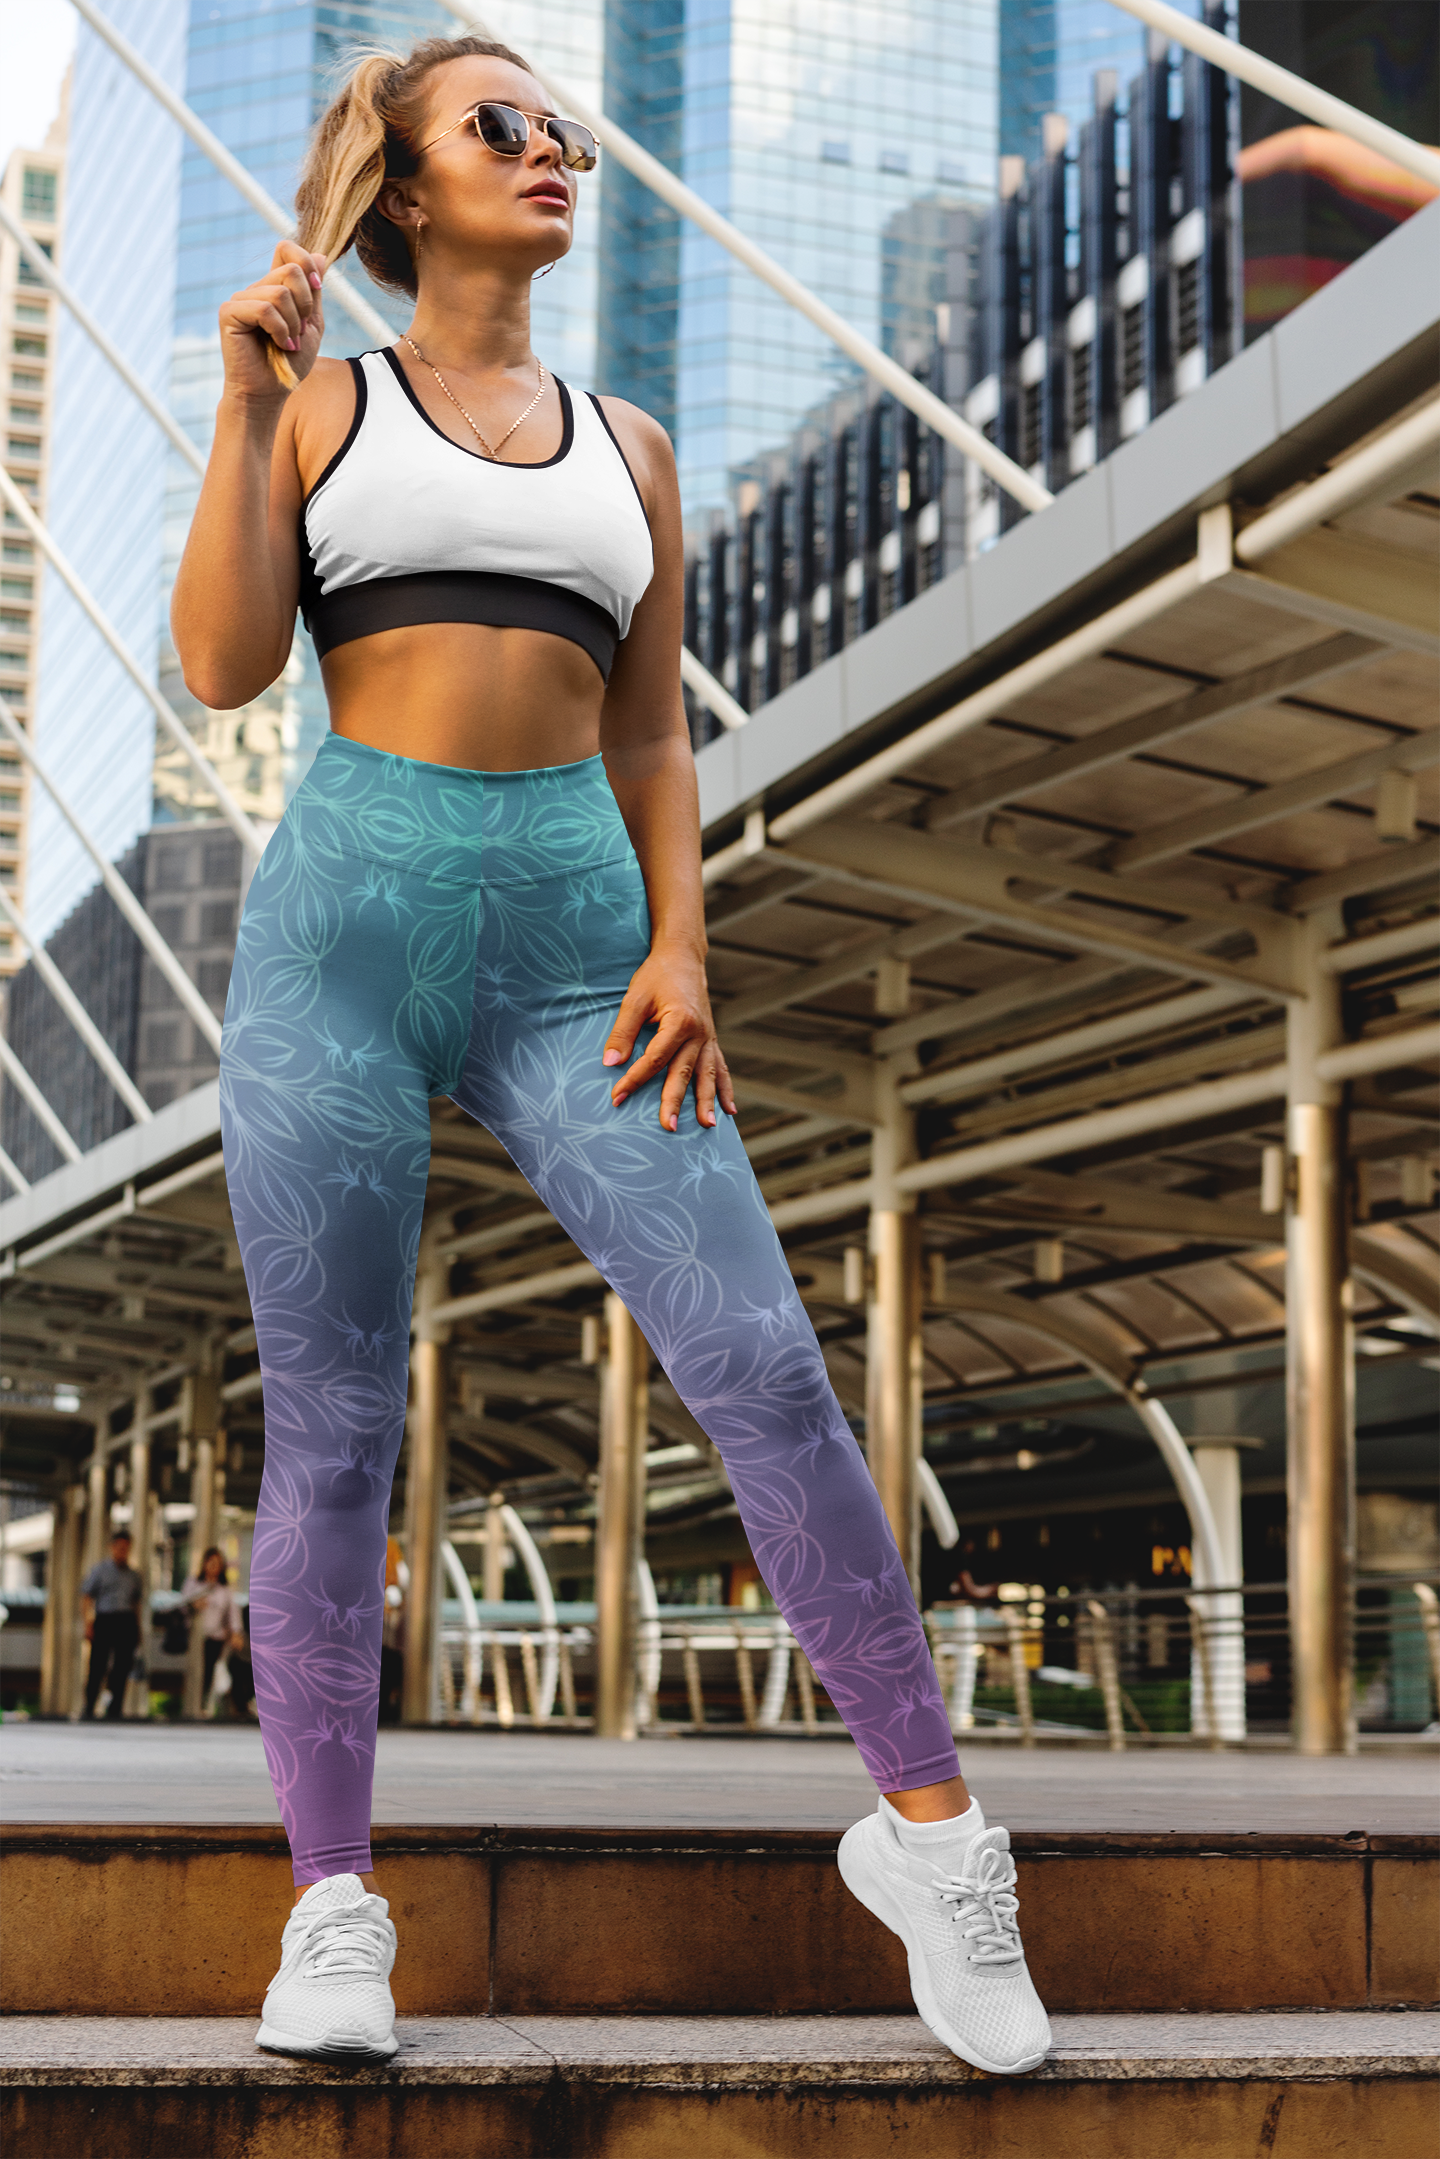 AbsoluteFit Abstract Printed Pantyhose | Anti-Squat | Women's workout  tights | 4-way stretch | Yoga, Gym, Cardio leggings | Women's Sportswear 